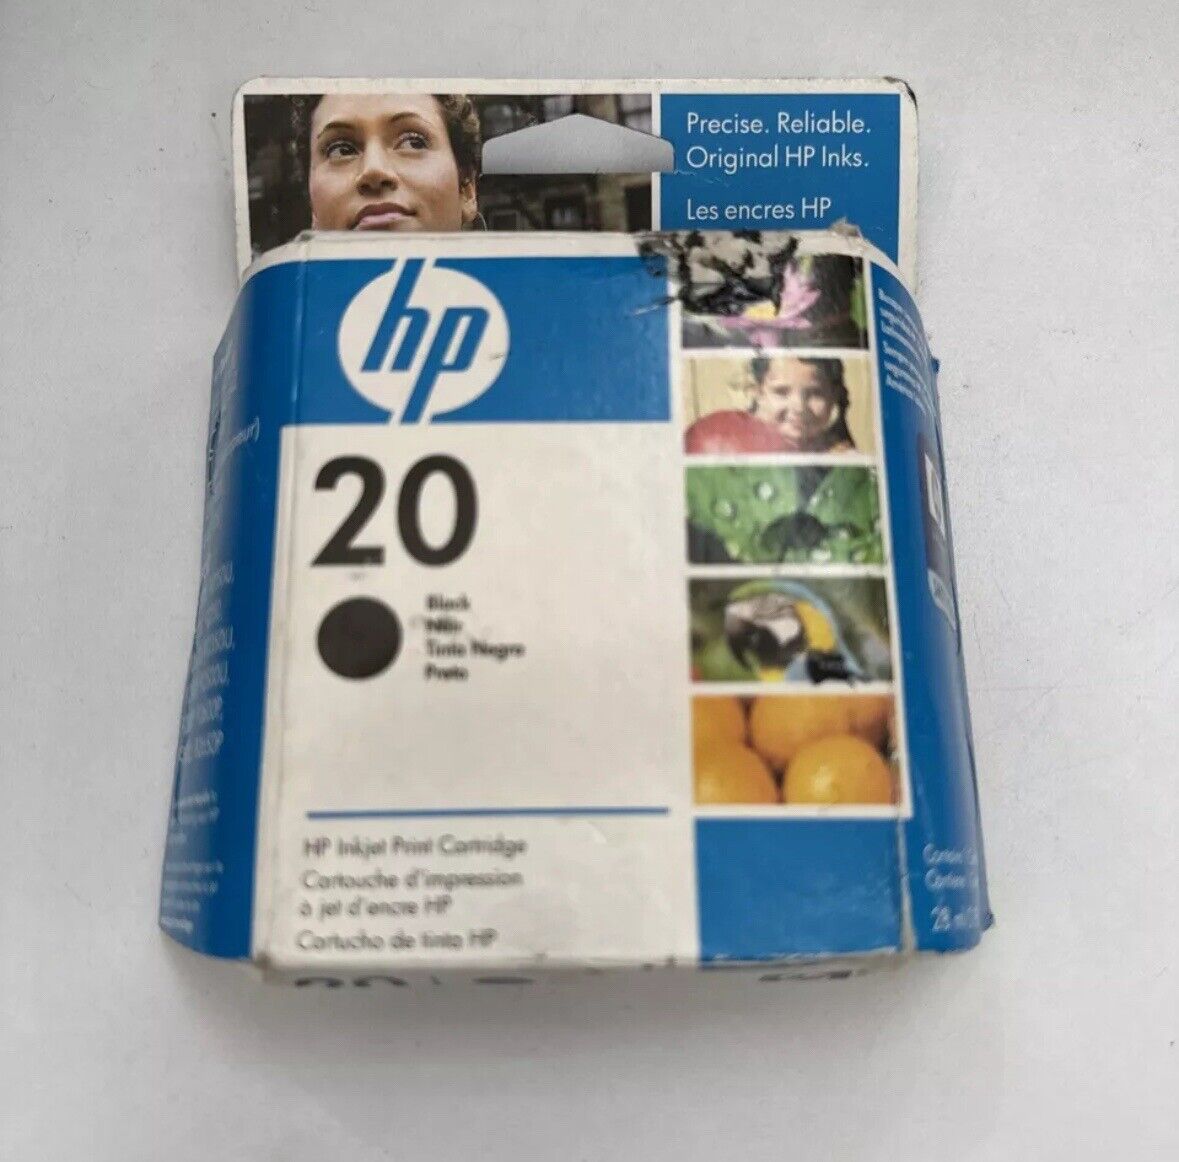 Genuine HP 20 Black Ink Cartridge Sealed Box New Old Stock Exp 06